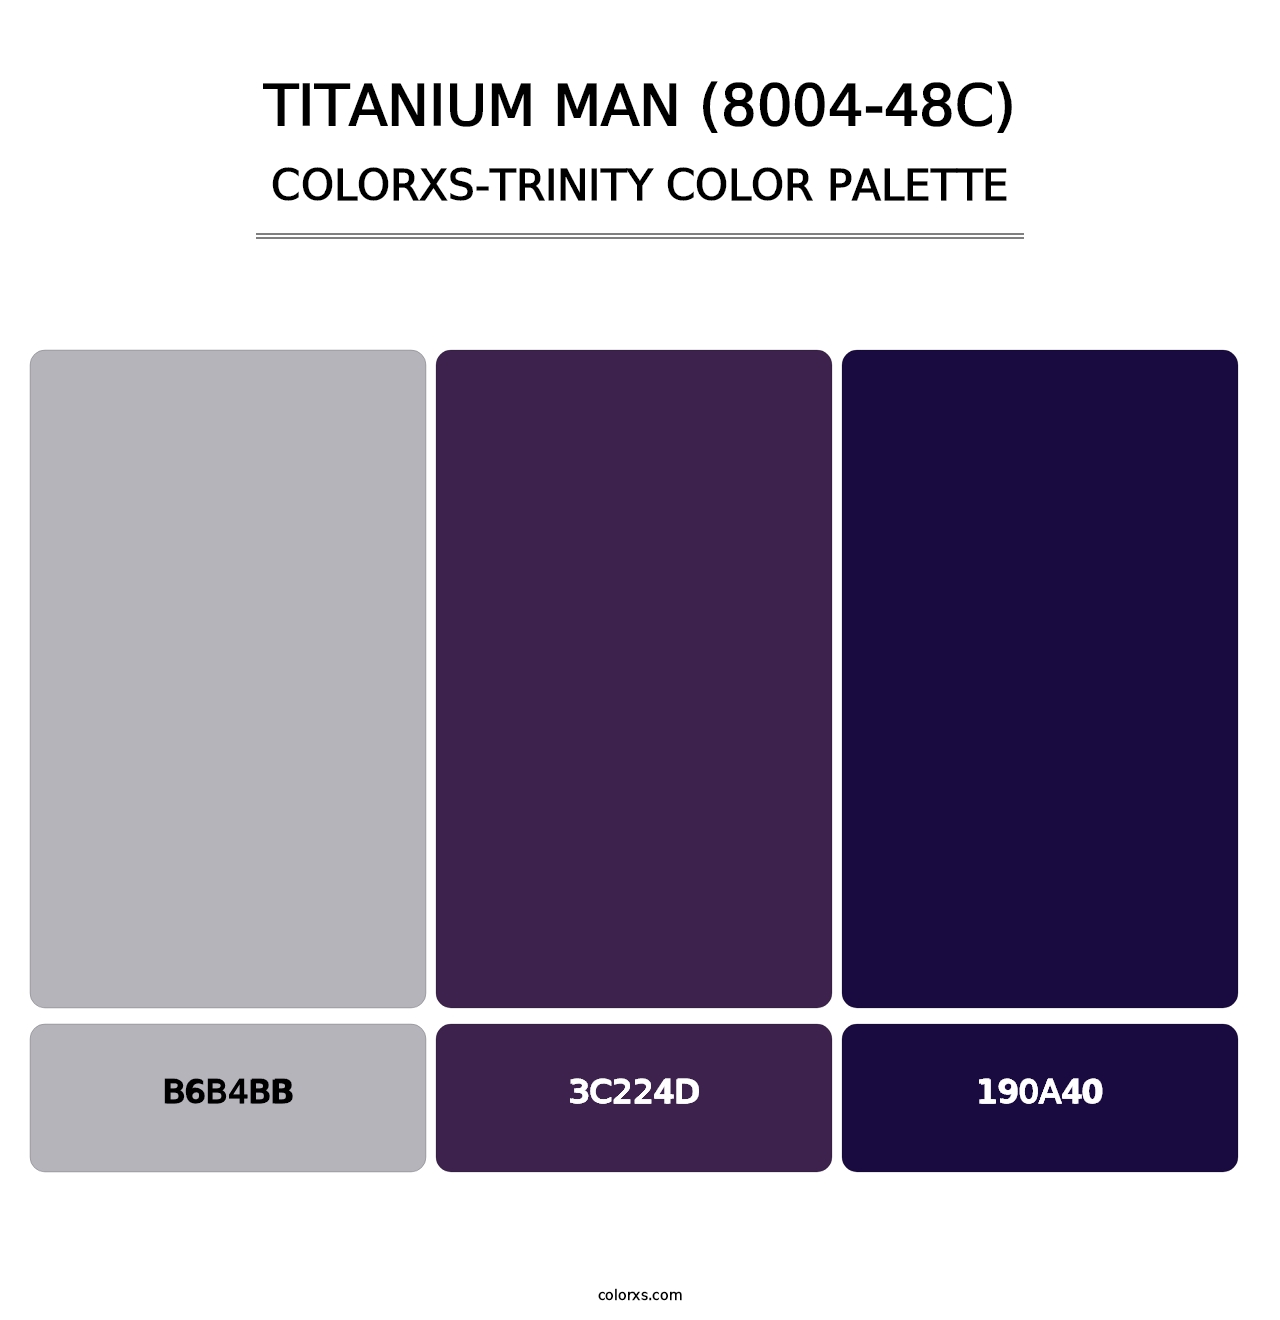 Titanium Man (8004-48C) - Colorxs Trinity Palette